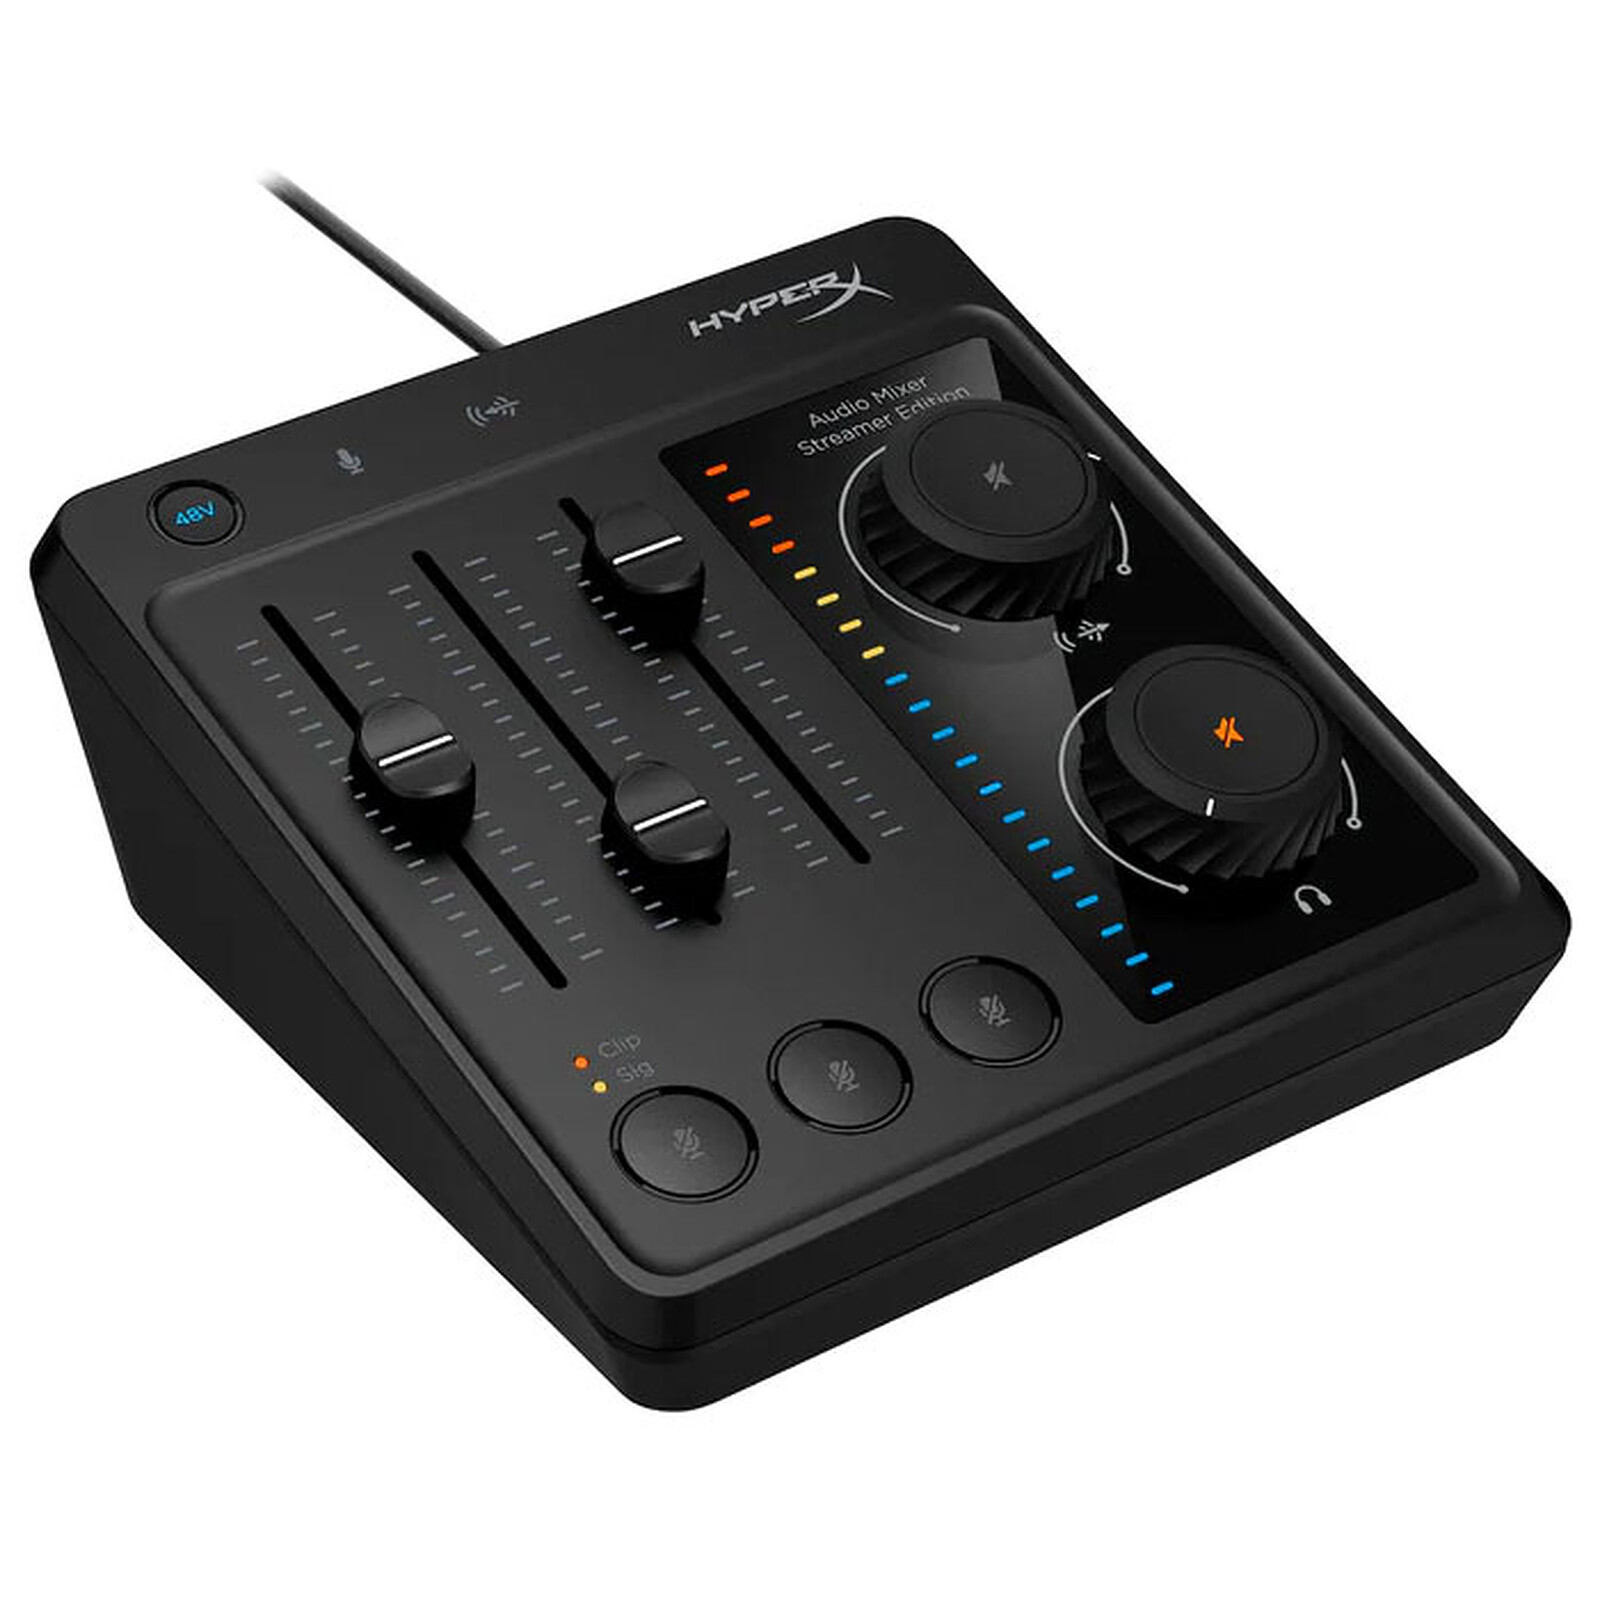 Buy Razer Audio Mixer, Streaming Accessories